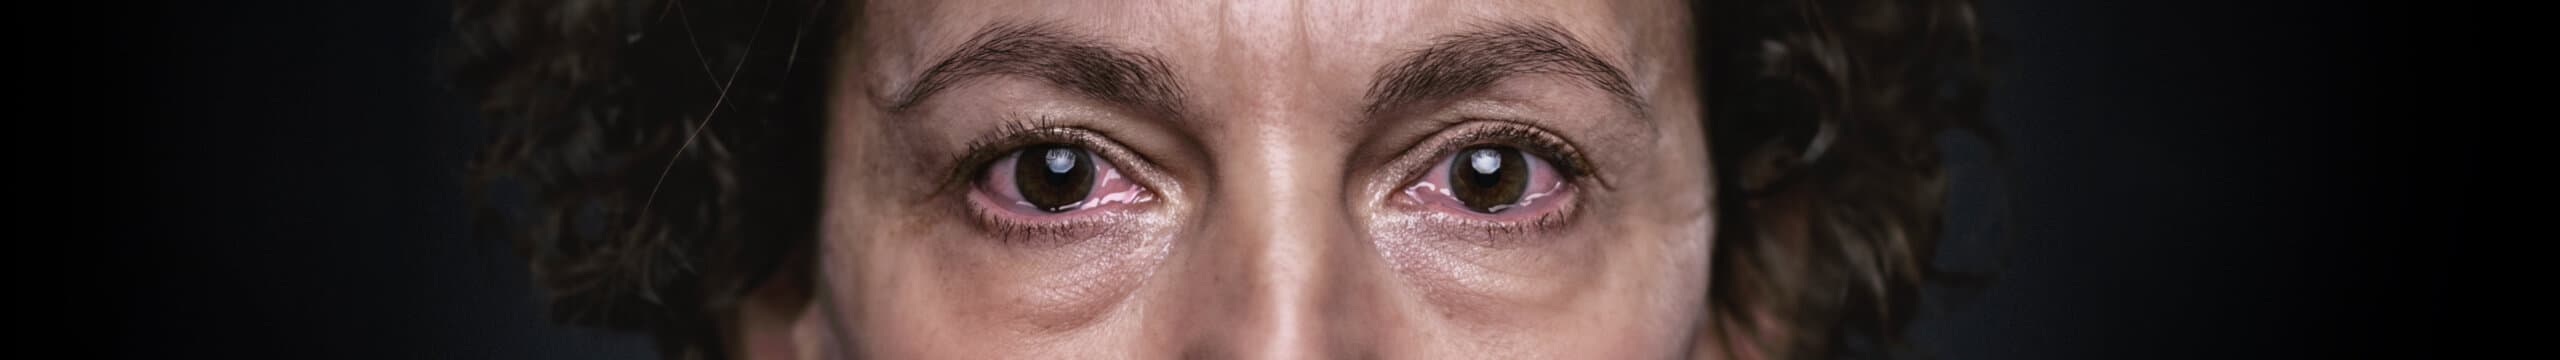 Depiction of red, teary eyes from Thyroid Eye Disease